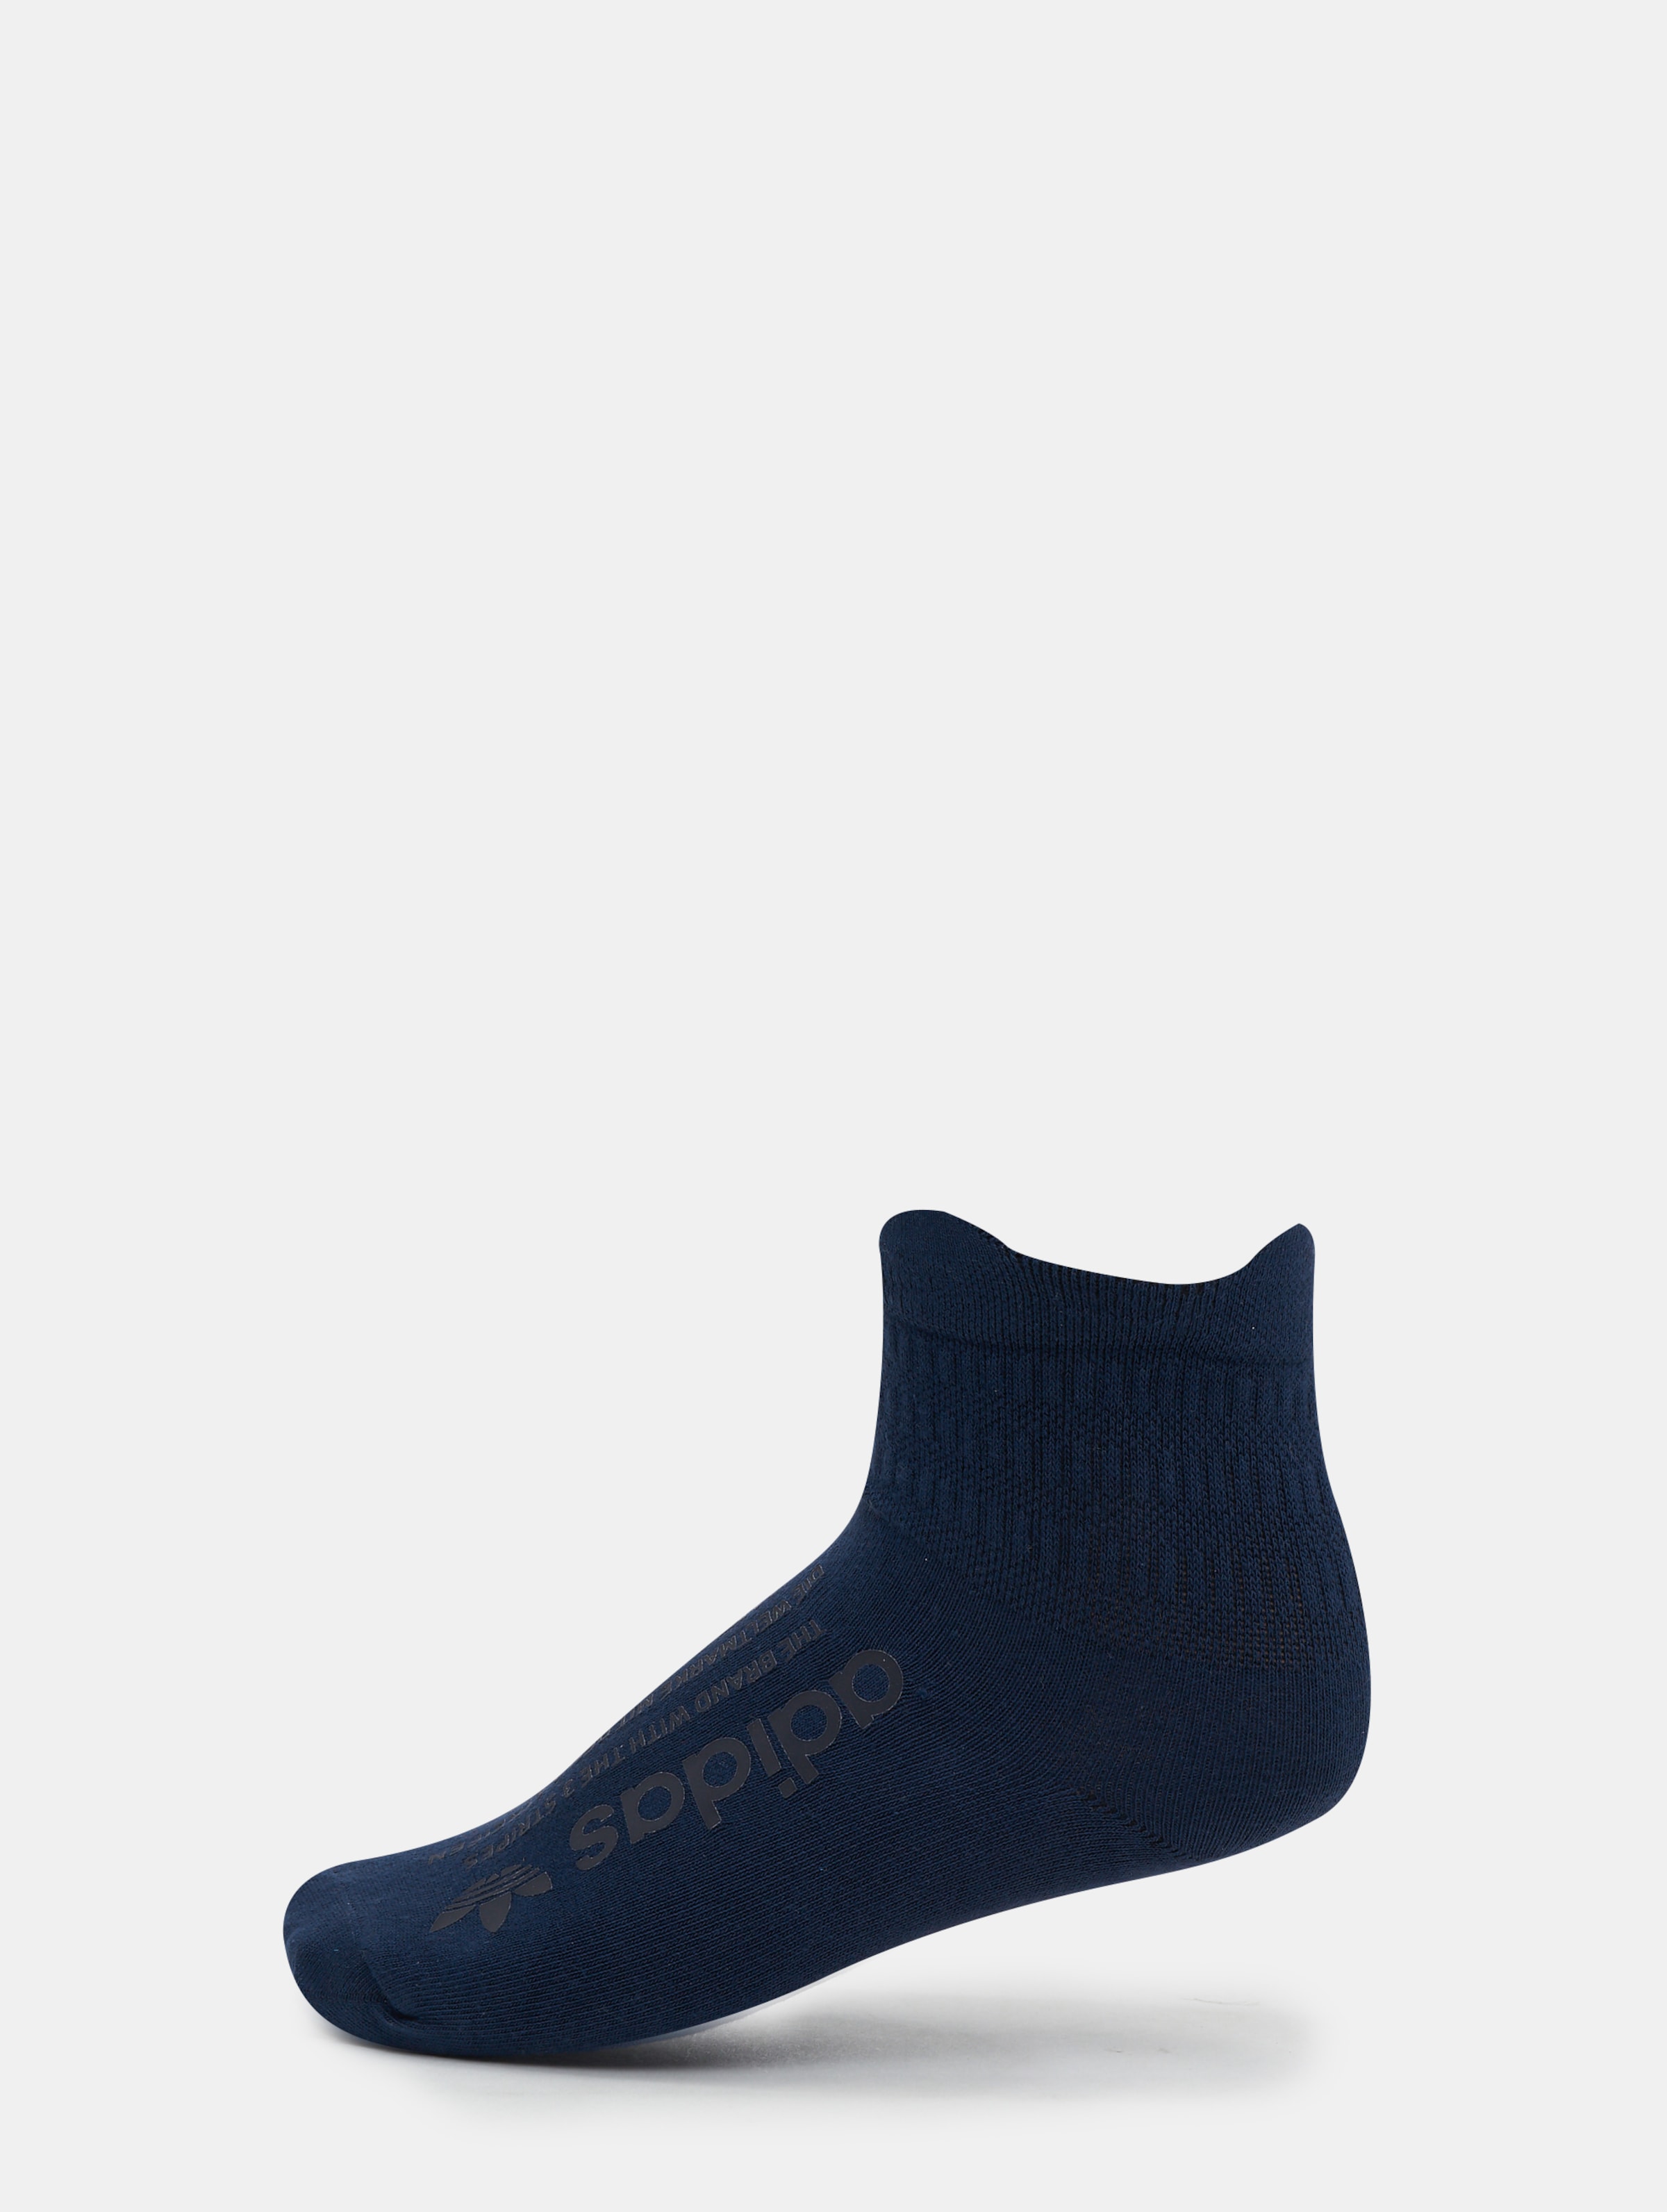 adidas Originals NMD Socken Frauen,Männer,Unisex op kleur blauw, Maat 3134